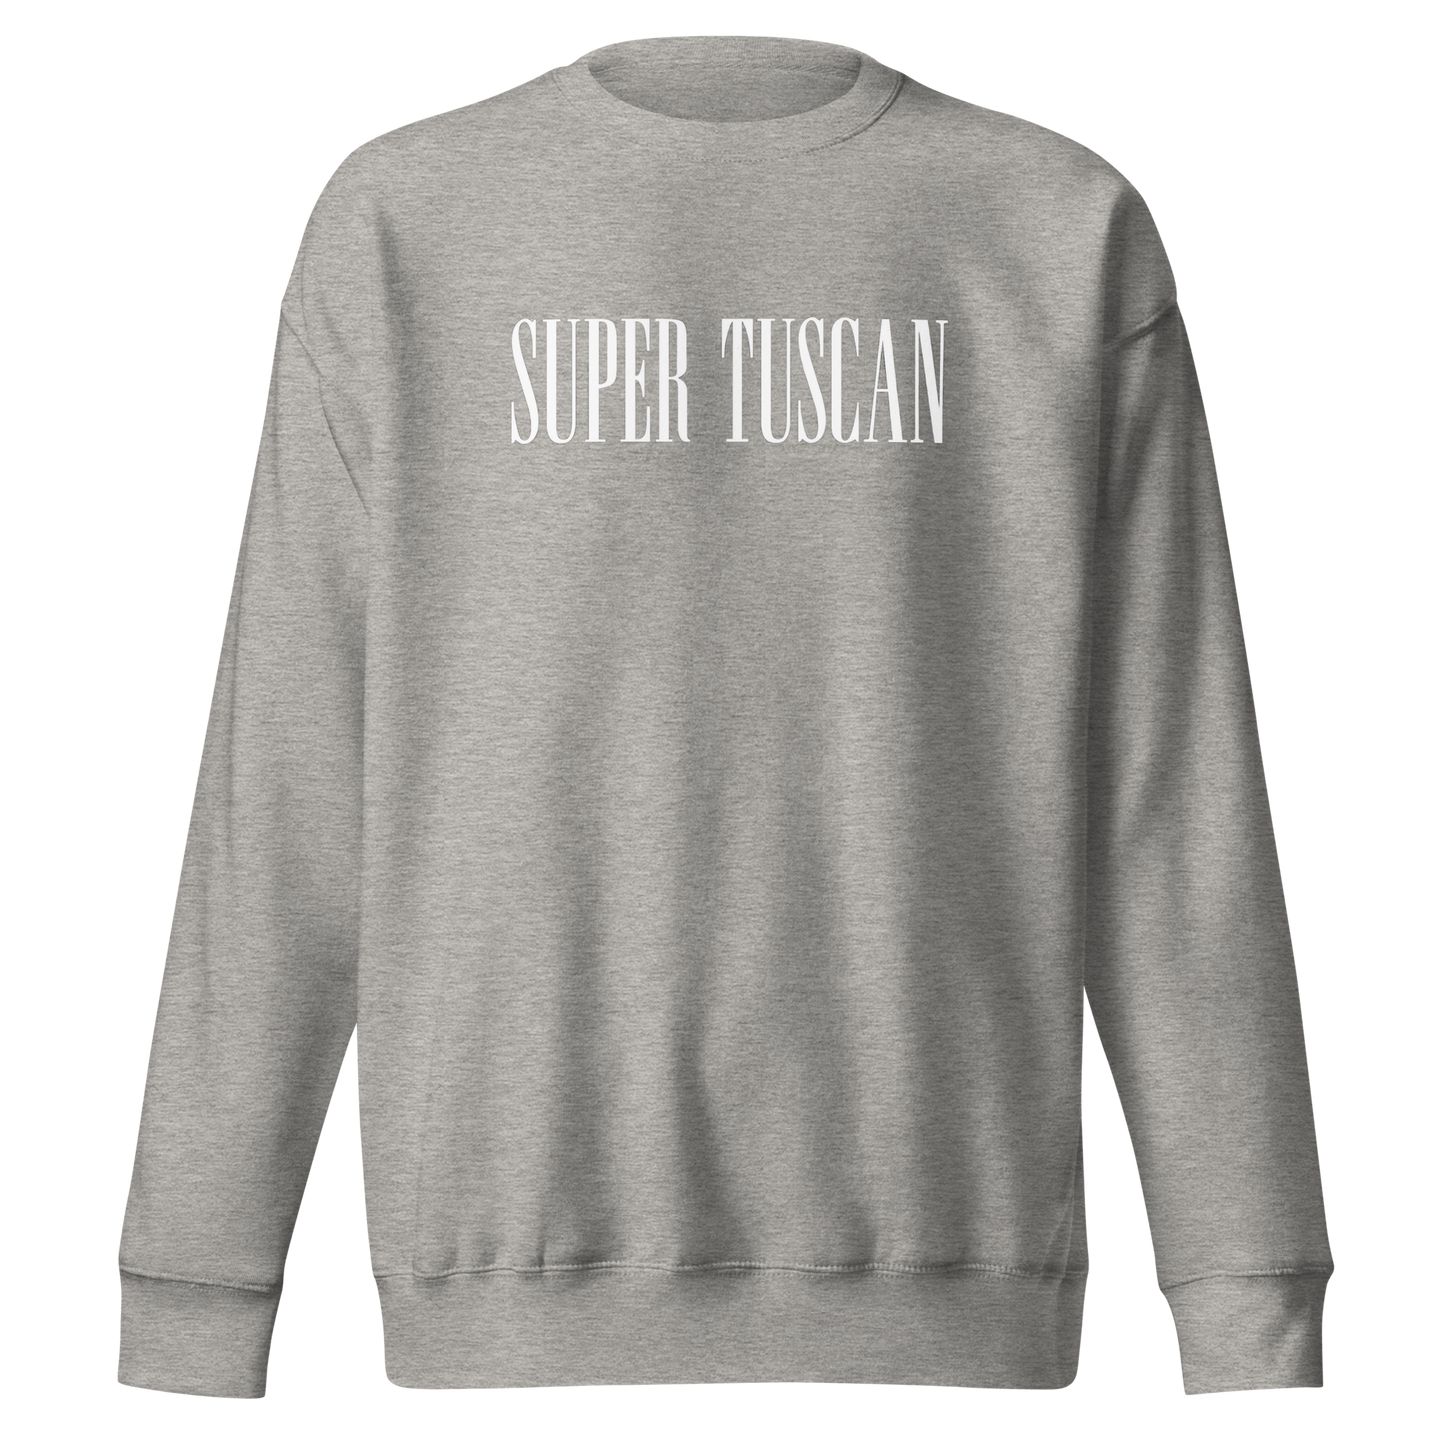 Super Tuscan sweatshirt